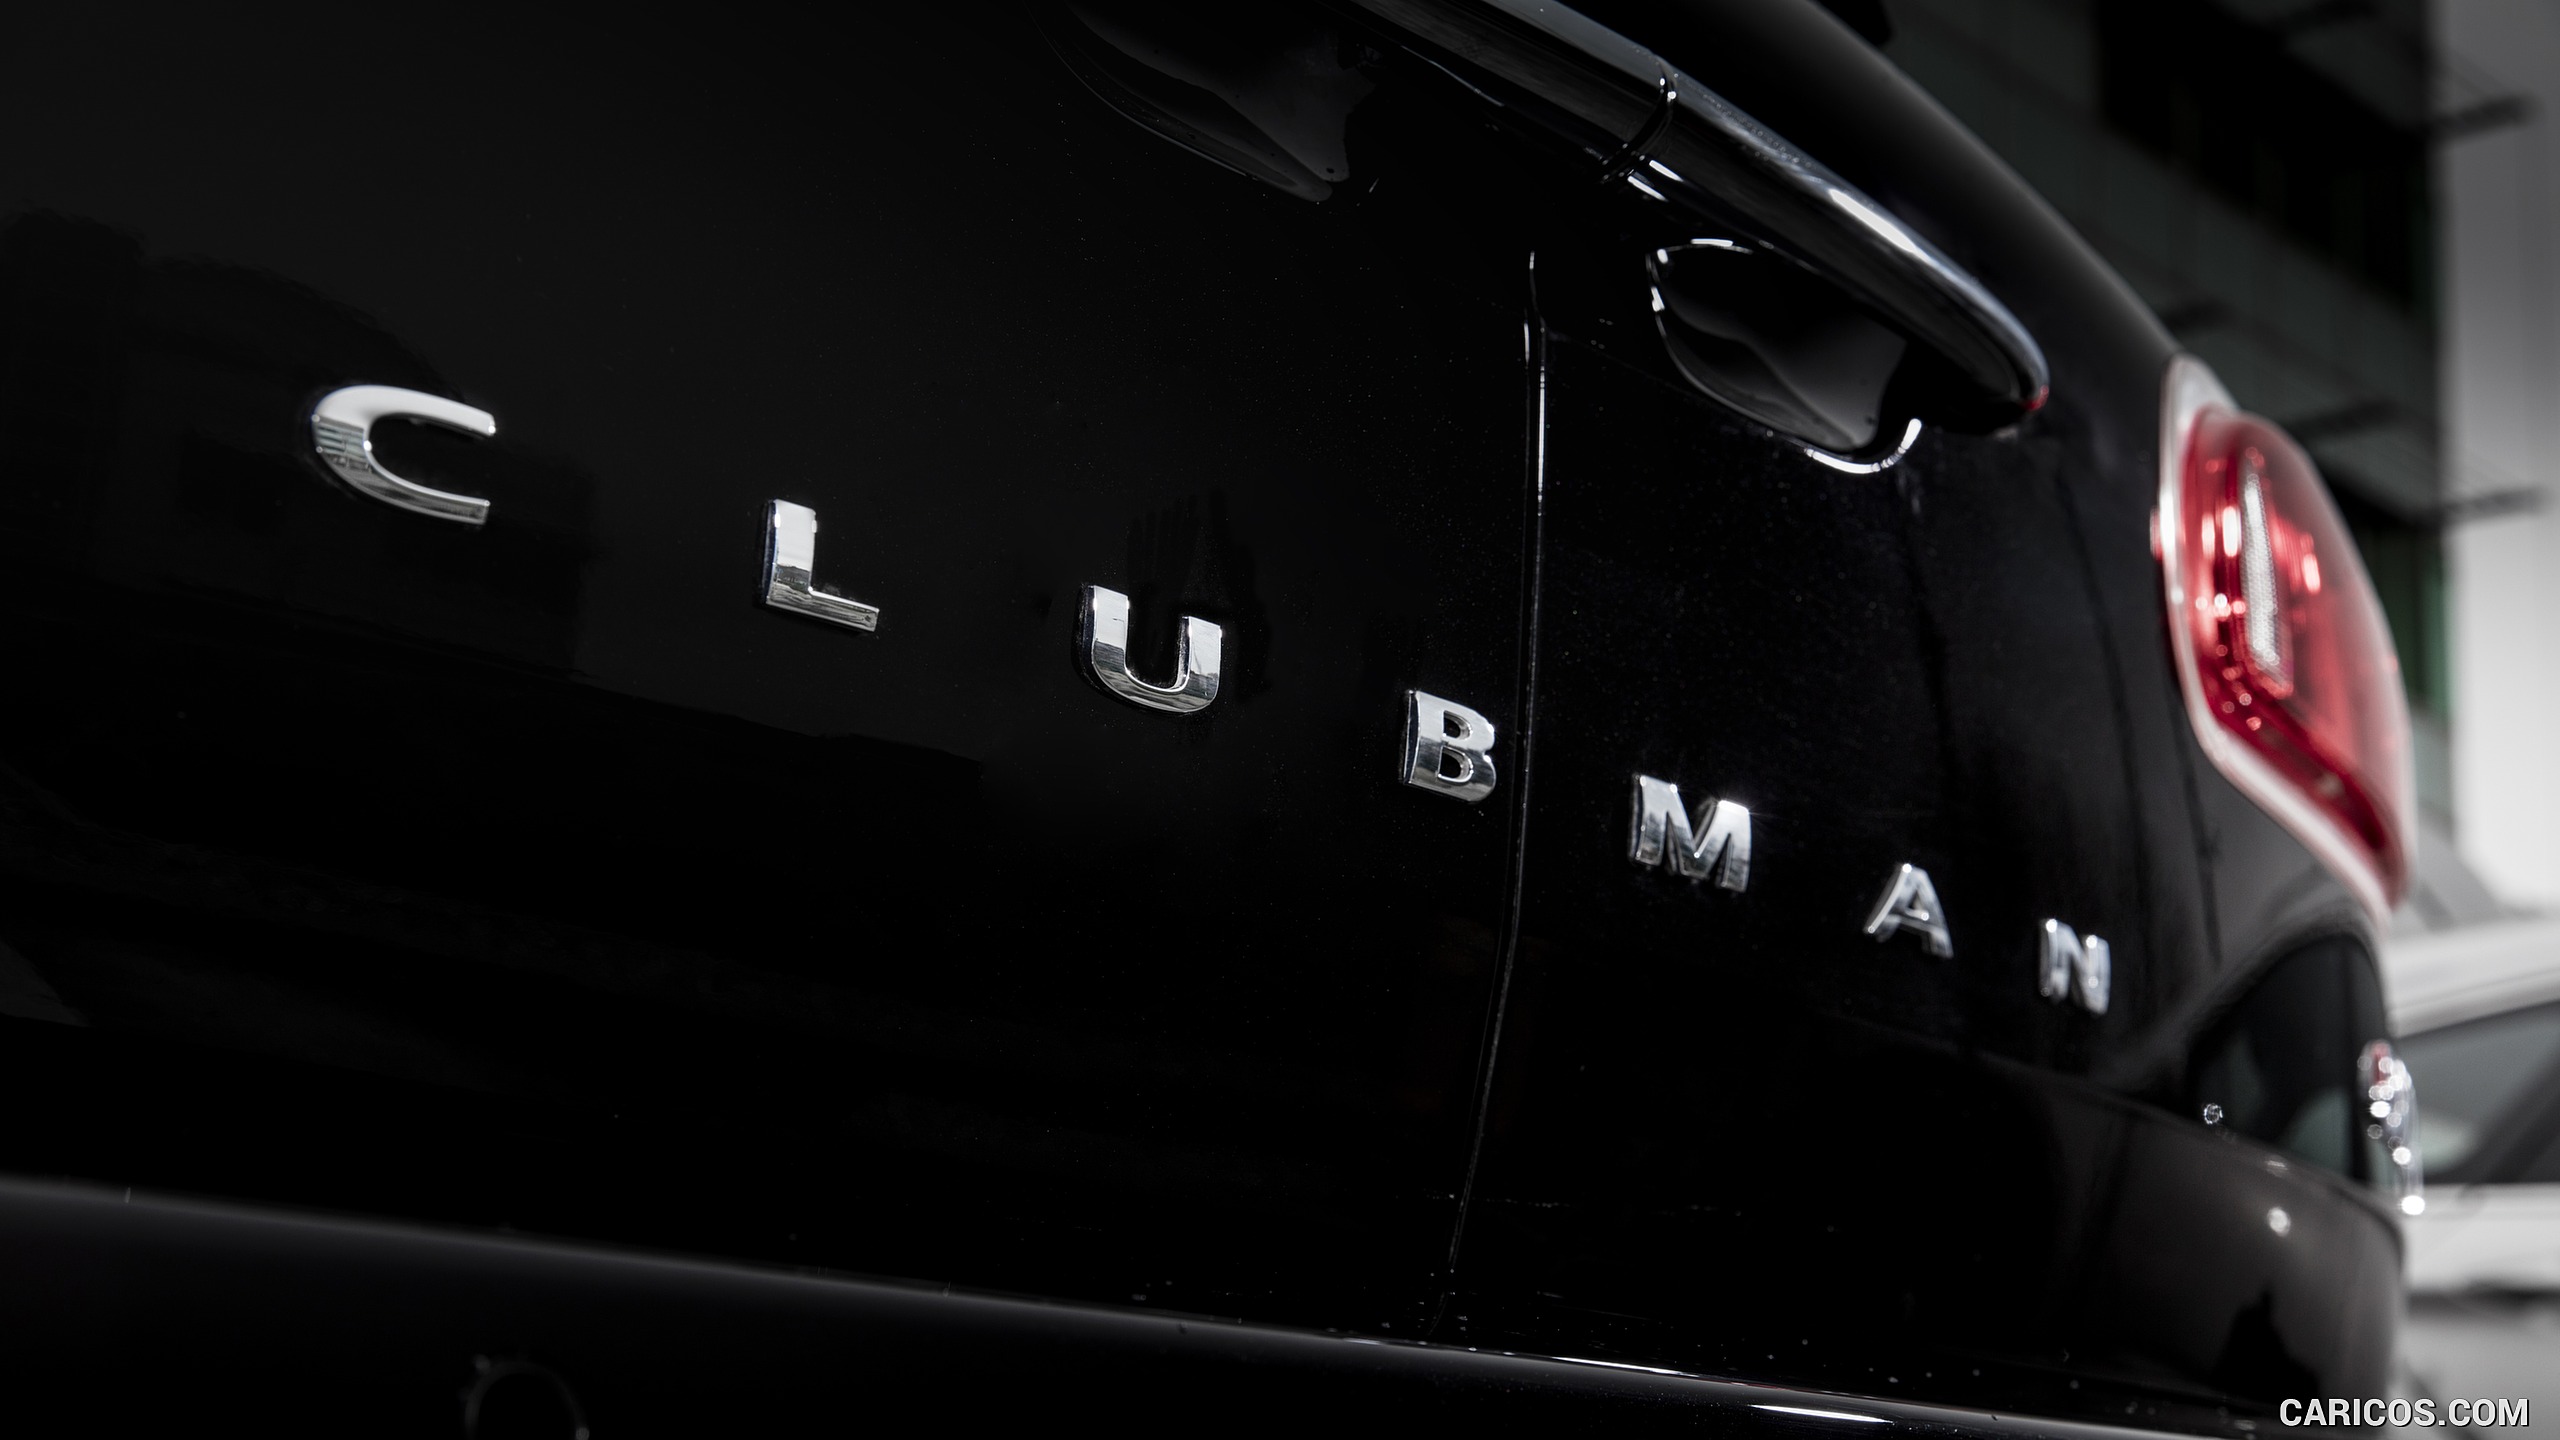 2016 MINI One D Clubman (UK-Spec, 3-Cylinder Turbo Diesel) - Badge, #11 of 20